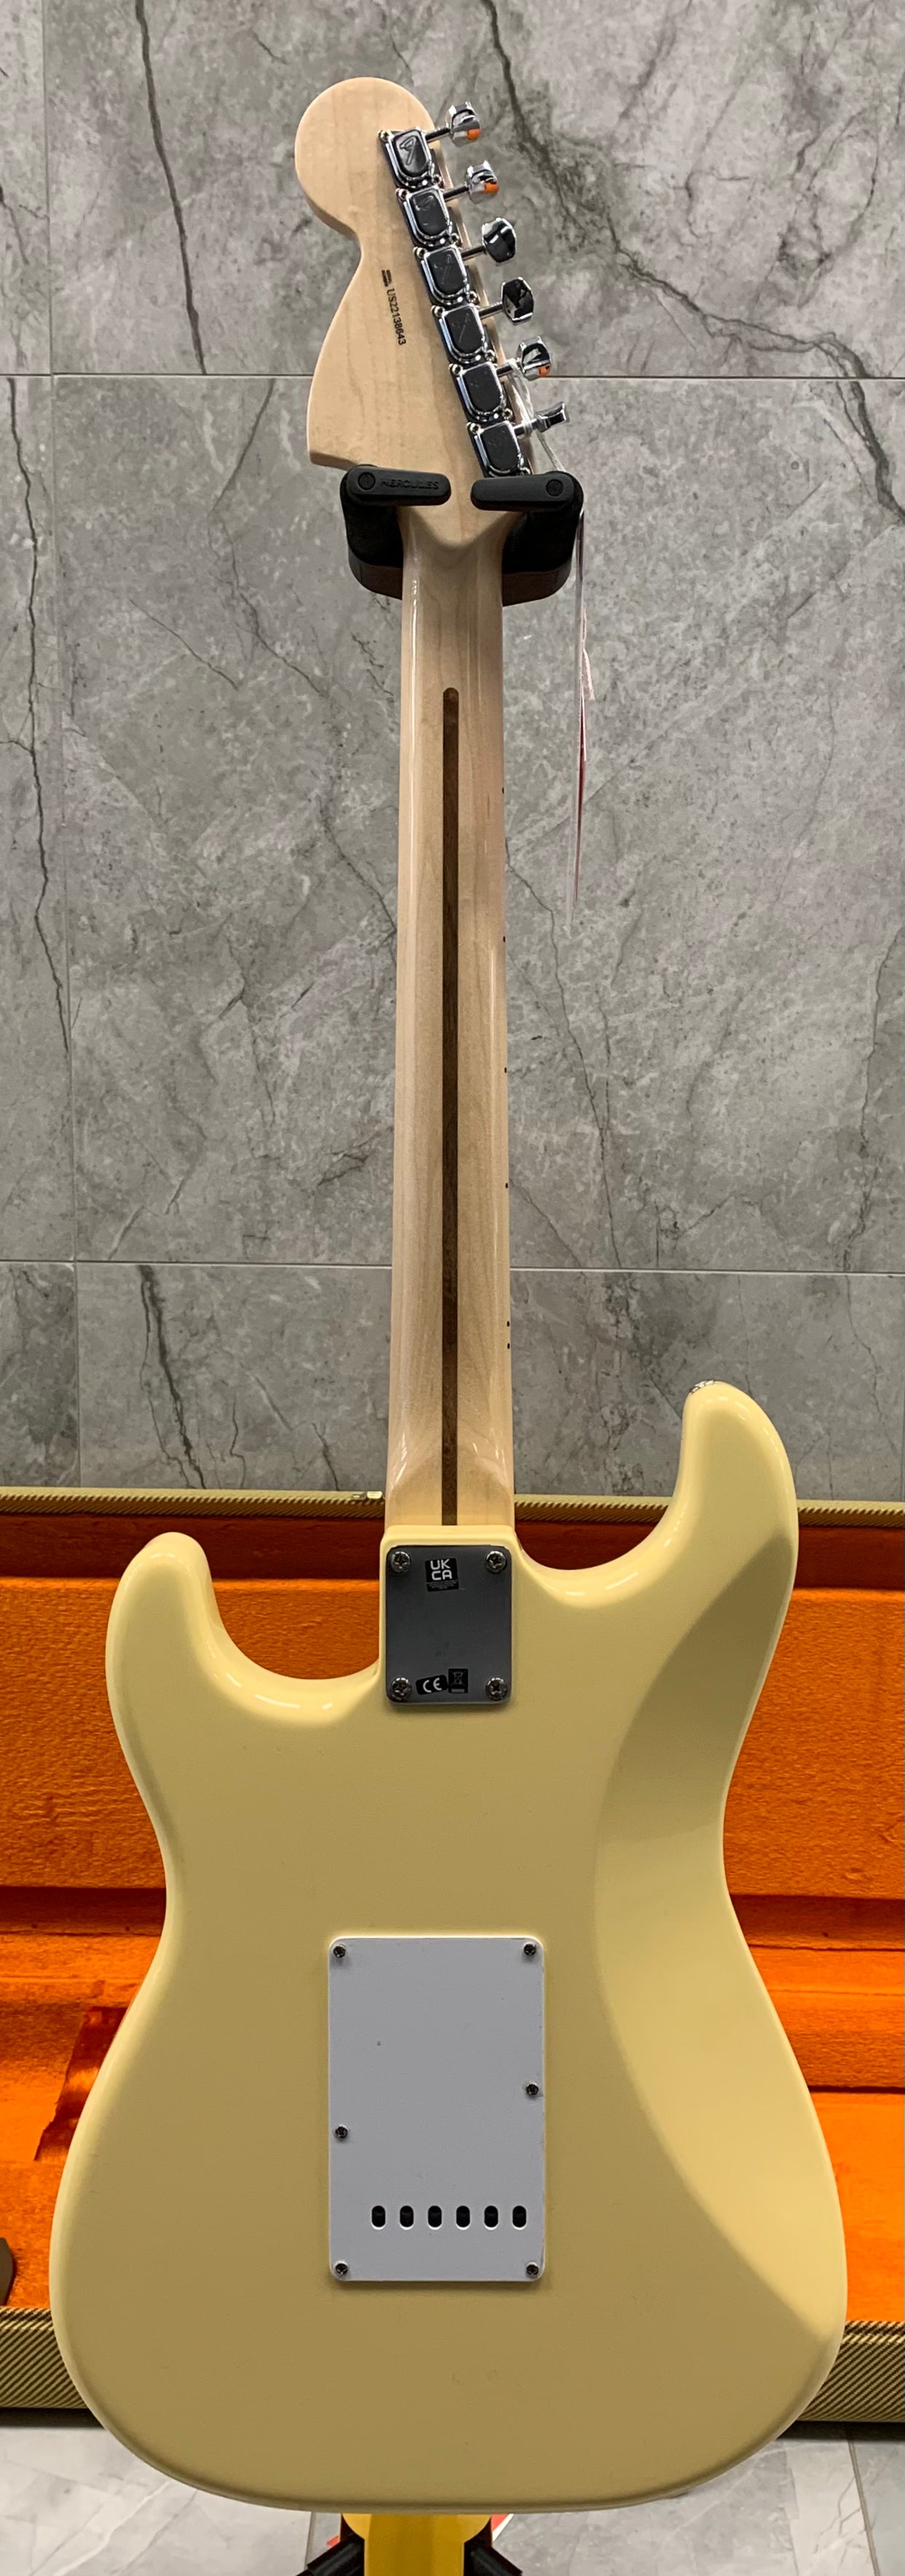 Fender Yngwie Malmsteen Stratocaster Scalloped Maple Fingerboard Vintage White 0107112841